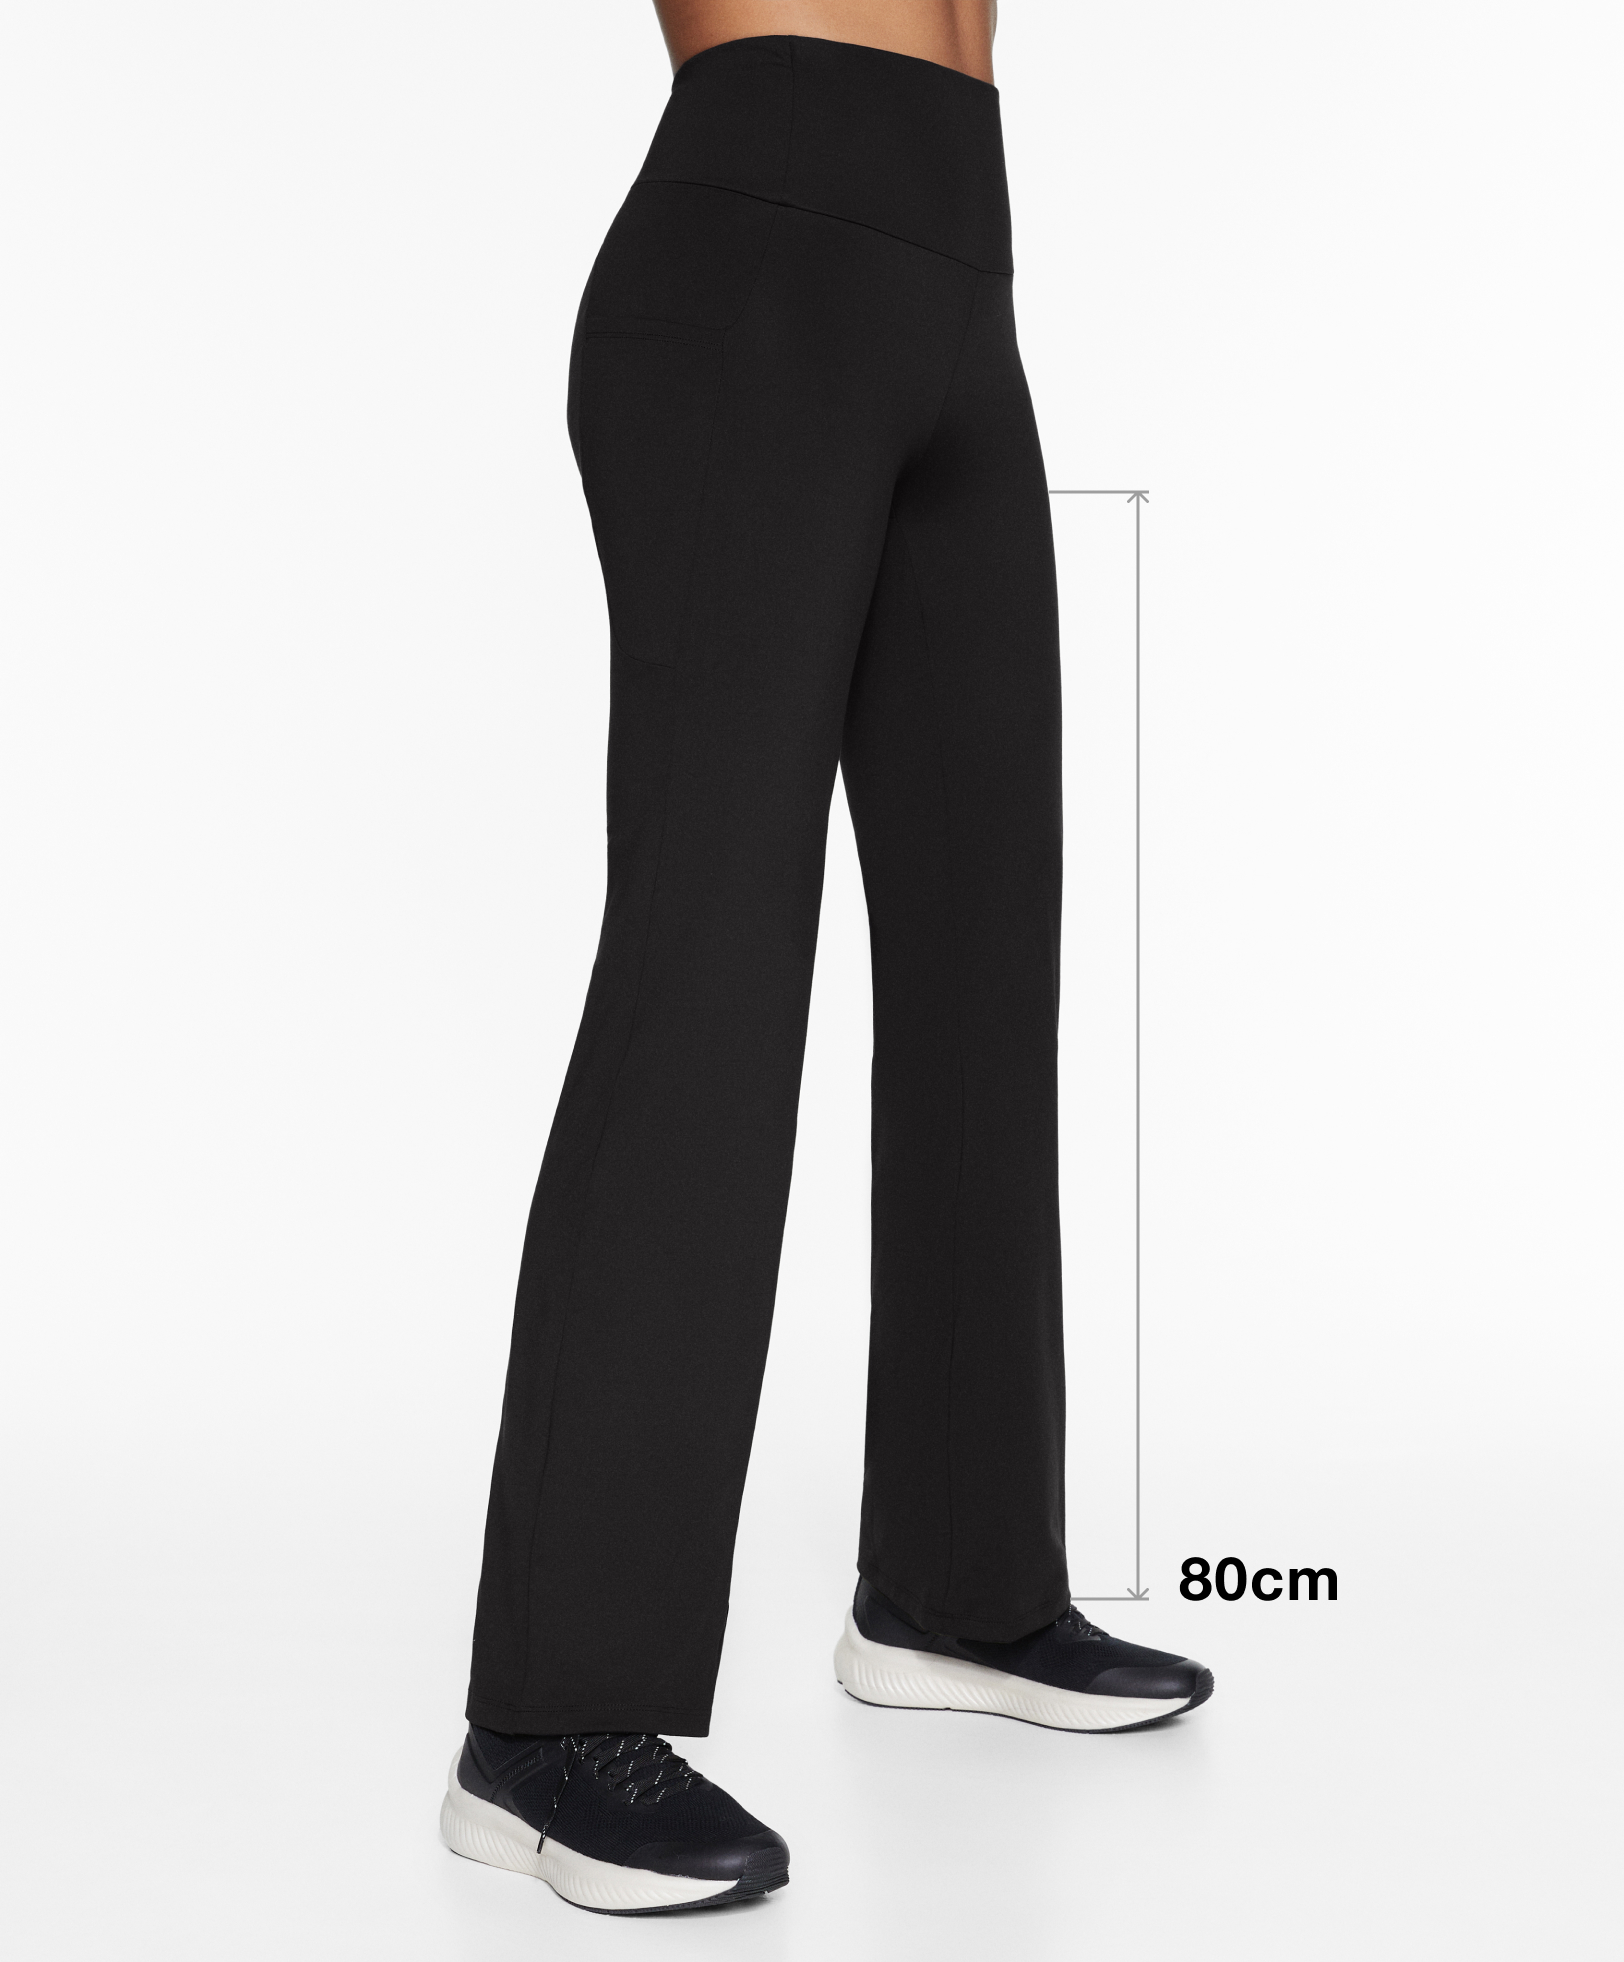 CenturyX Bootcut Yoga Pants for Women Stretchy Work Algeria